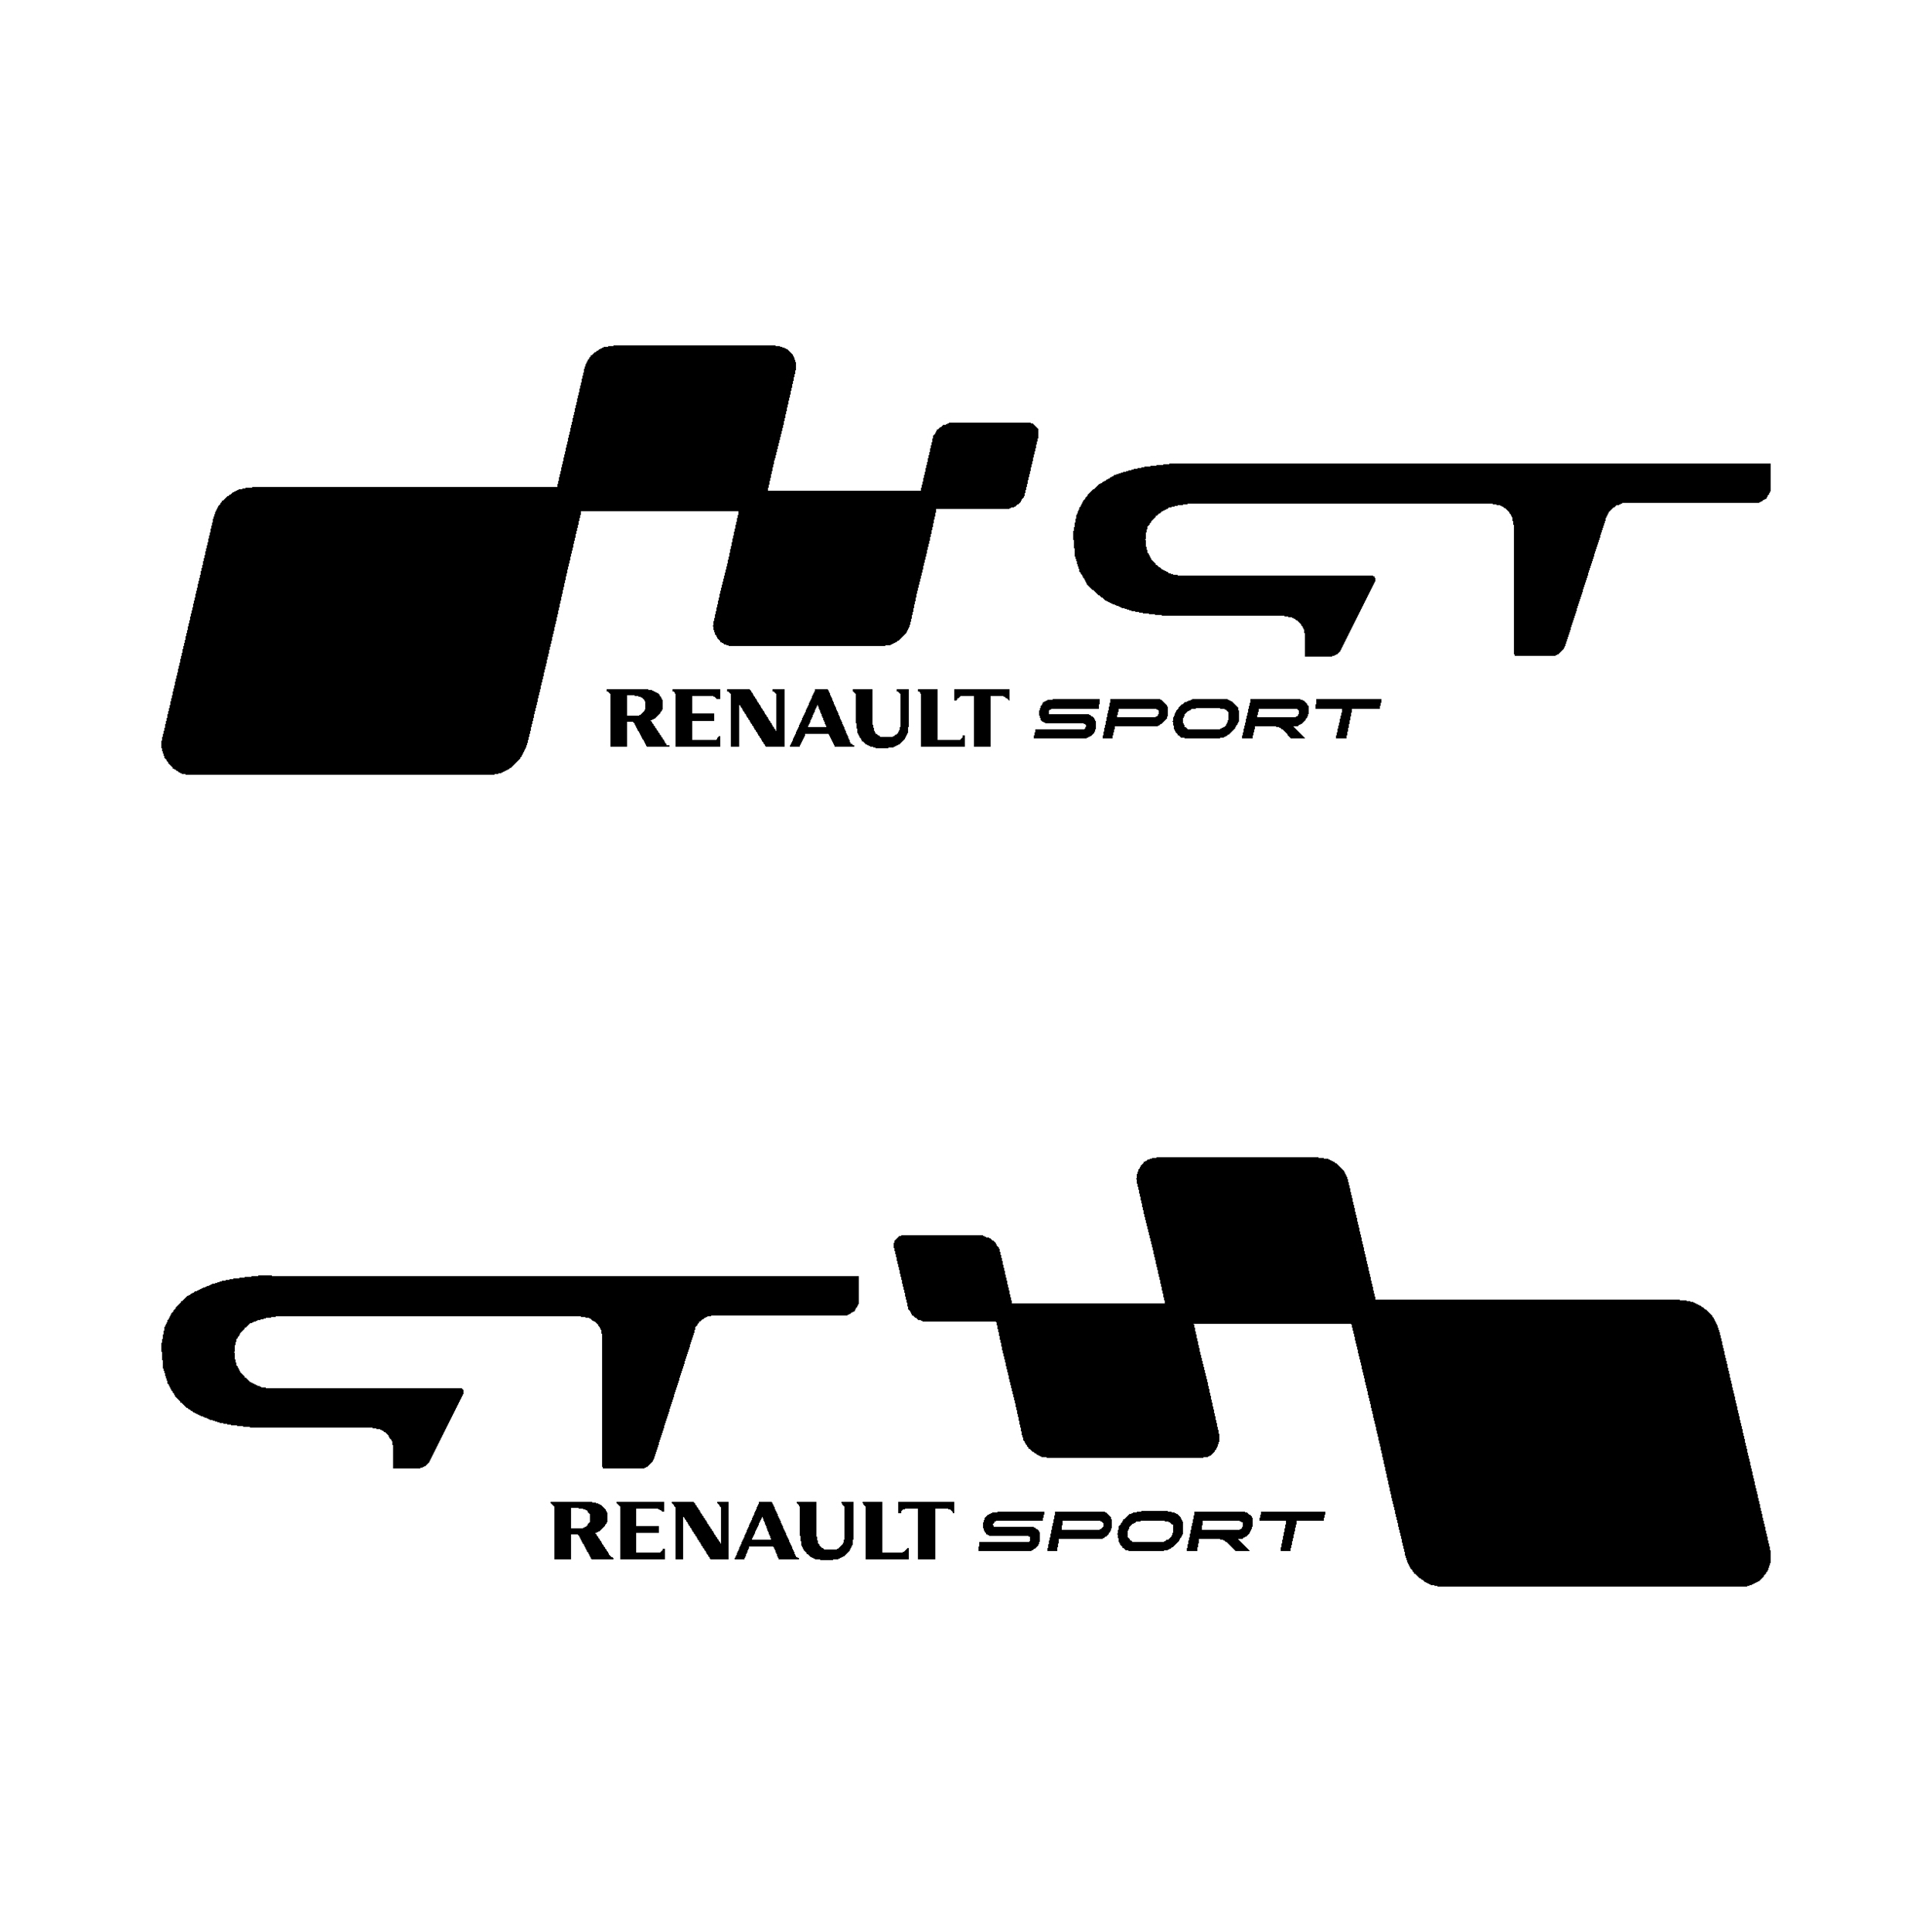 Stickers RENAULT sport ref 1 - VOITURE/RENAULT - automotostick